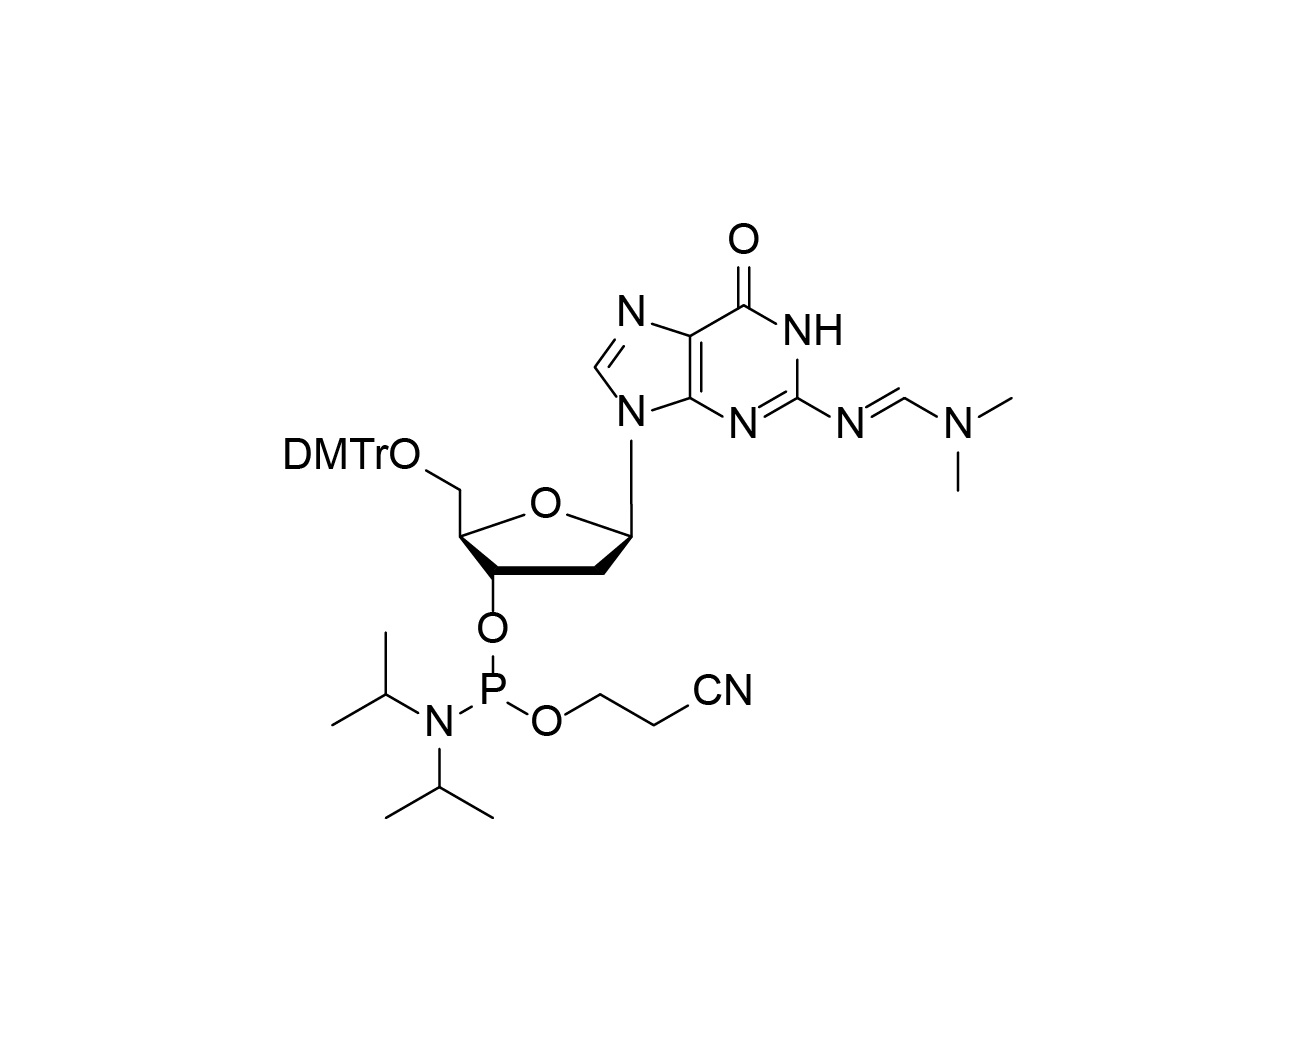 DMTr-dG(dmf)-3'-CE-Phosphoramidite